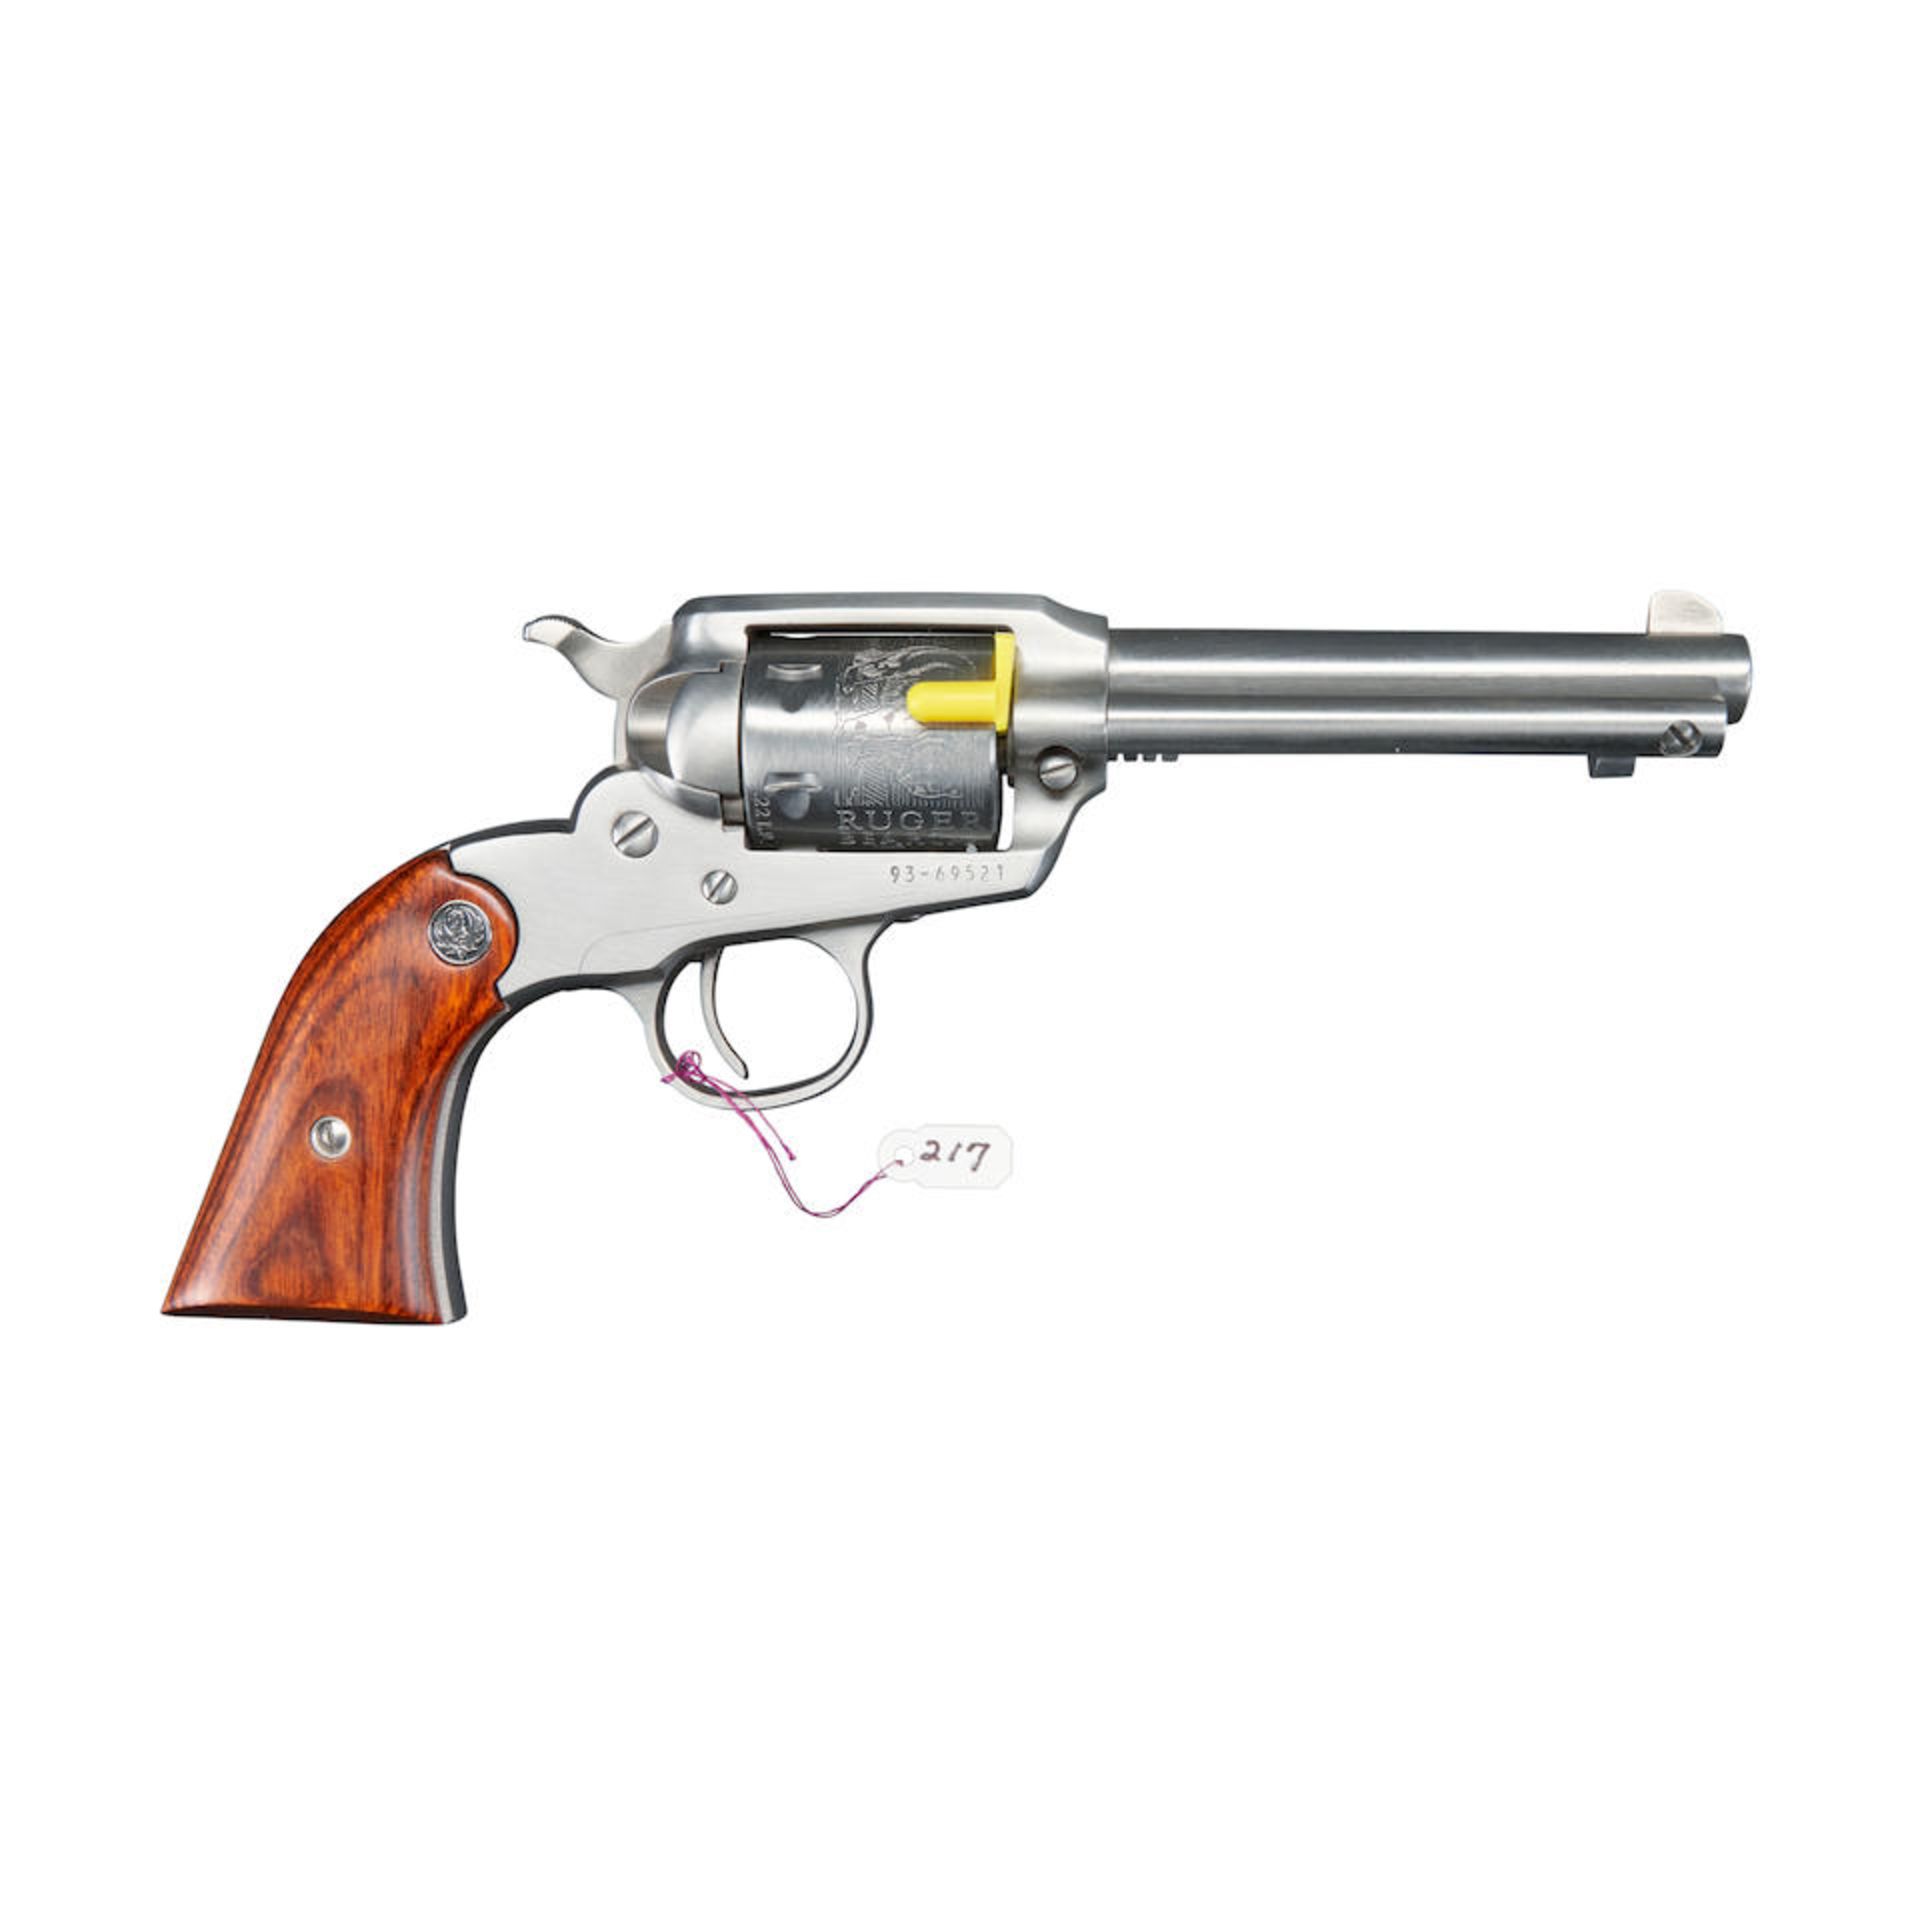 Ruger New Bearcat Stainless Steel Single Action Revolver, Modern handgun - Image 4 of 4